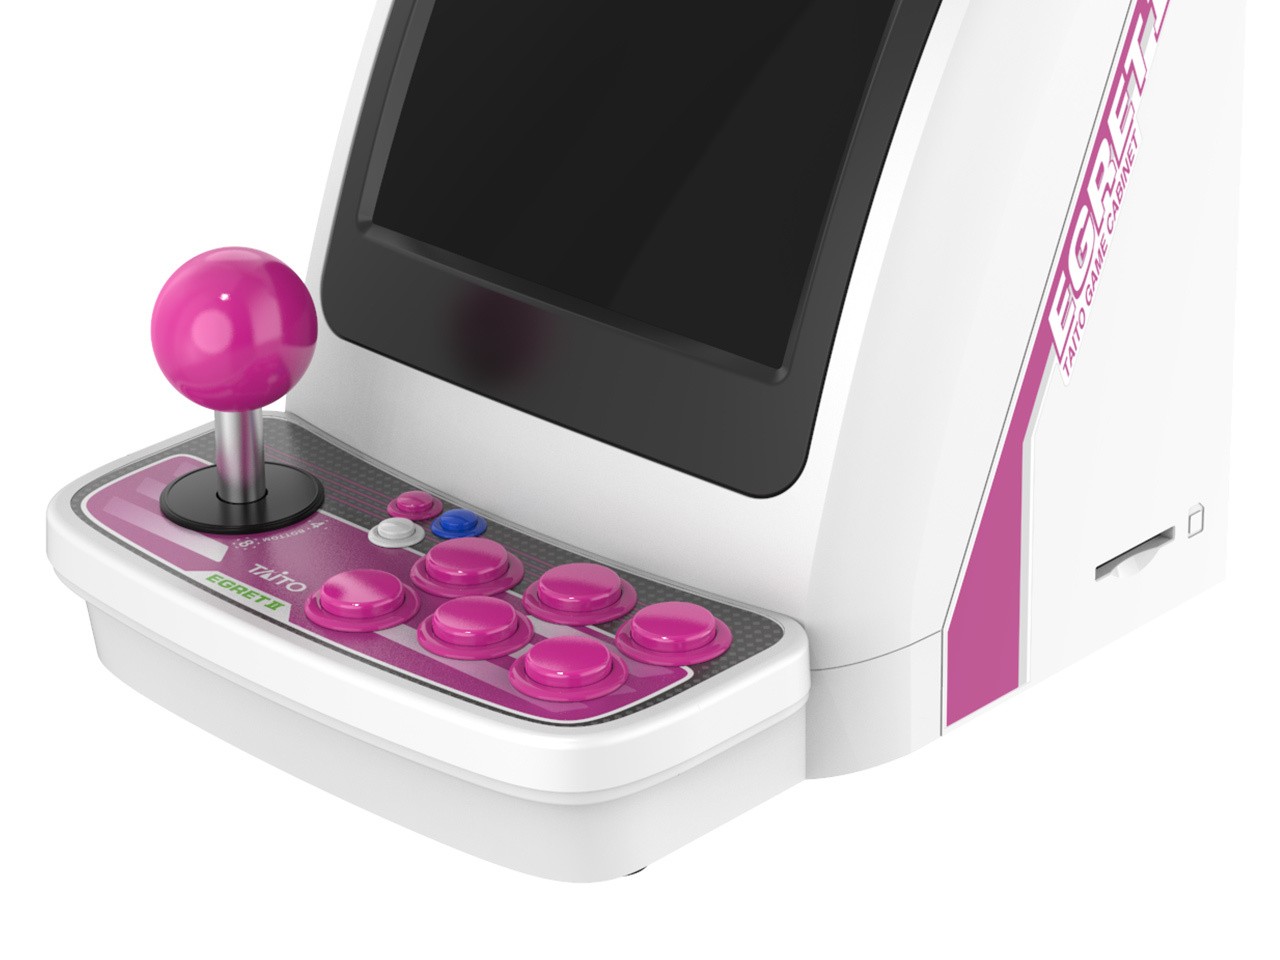 TAITO 发表迷你大型电玩机台“EGRET II mini” 采用独特可转向萤幕设计